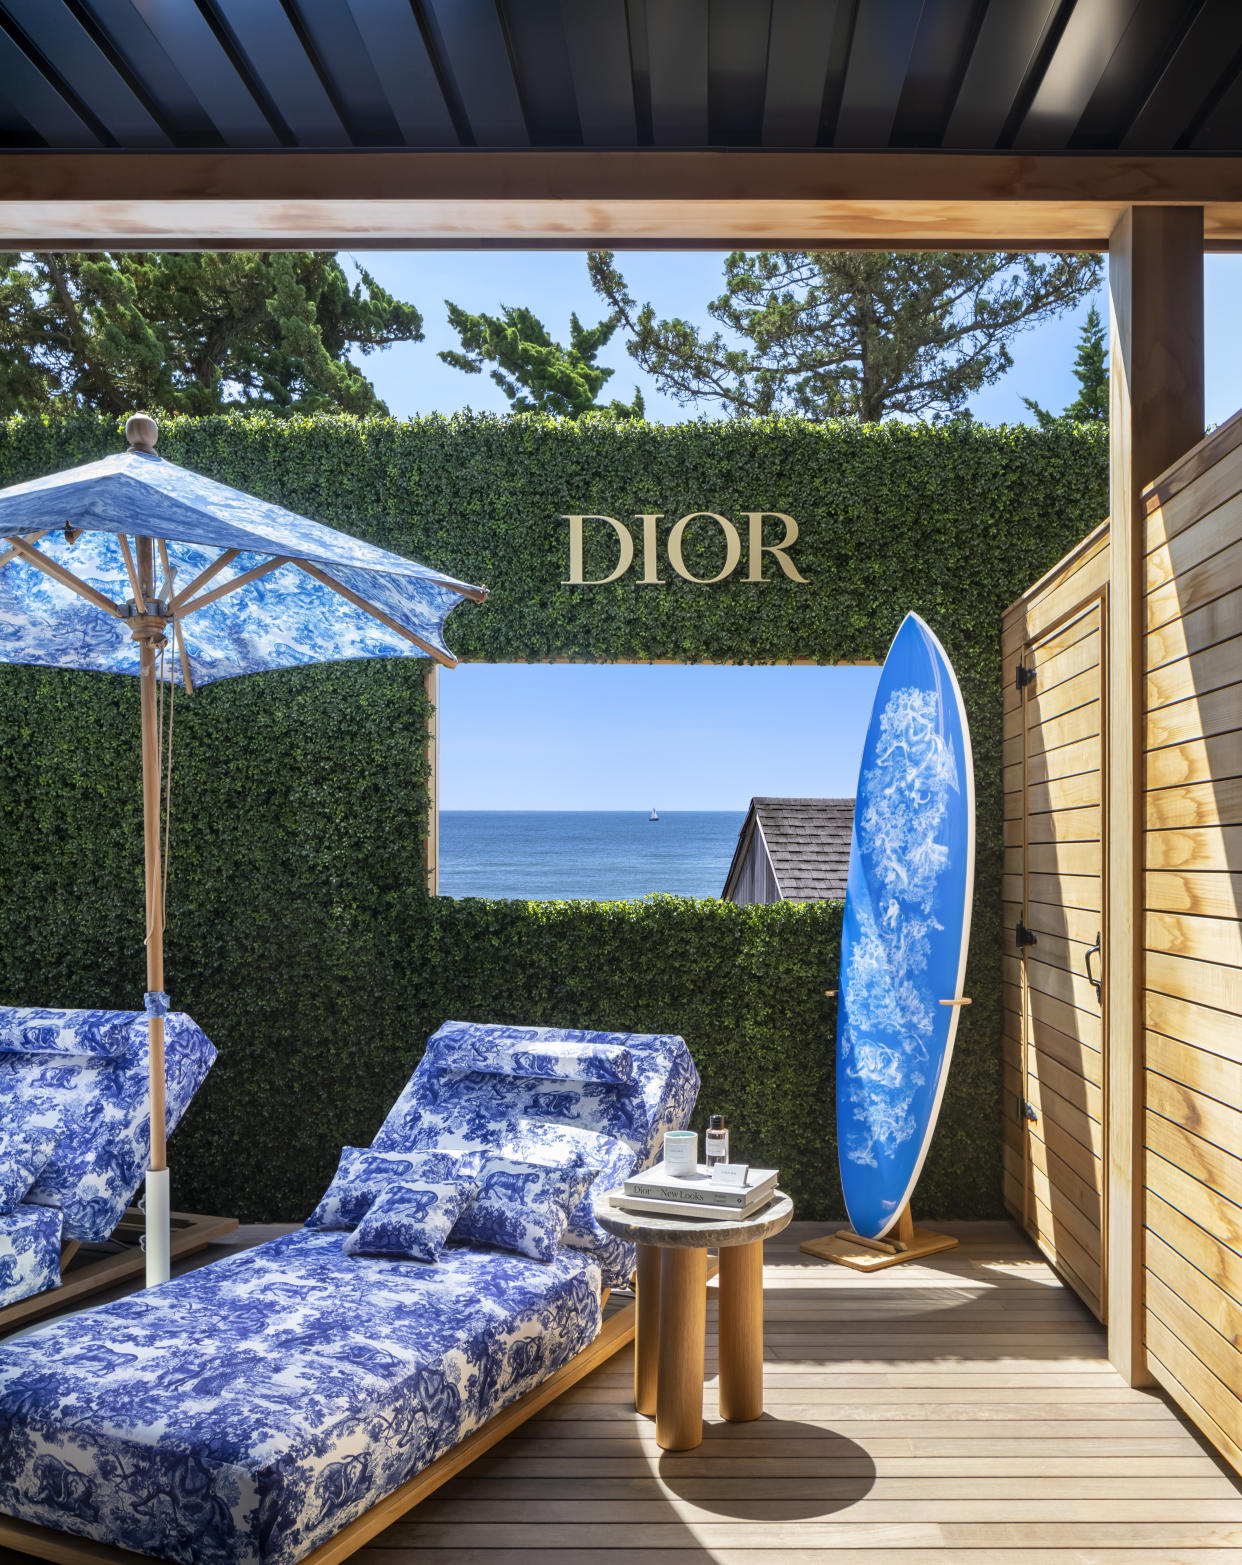 Dior’s treatment room at Gurney’s Montauk Resort. - Credit: Photo courtesy of Dior/Francis Dzikowski